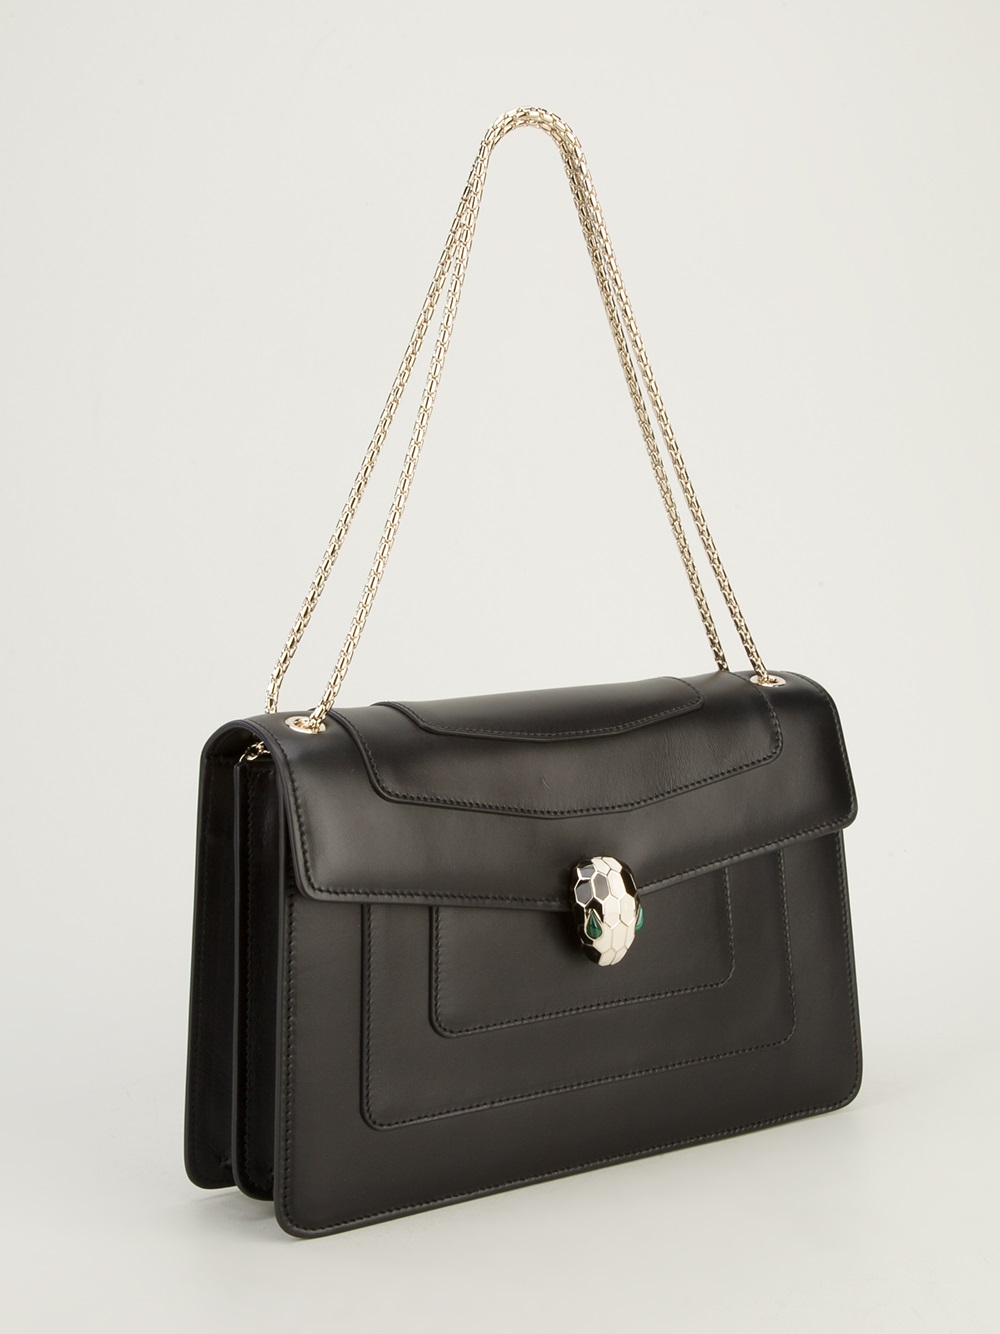 Bvlgari Chain-Strap Leather Shoulder Bag in Black | Lyst